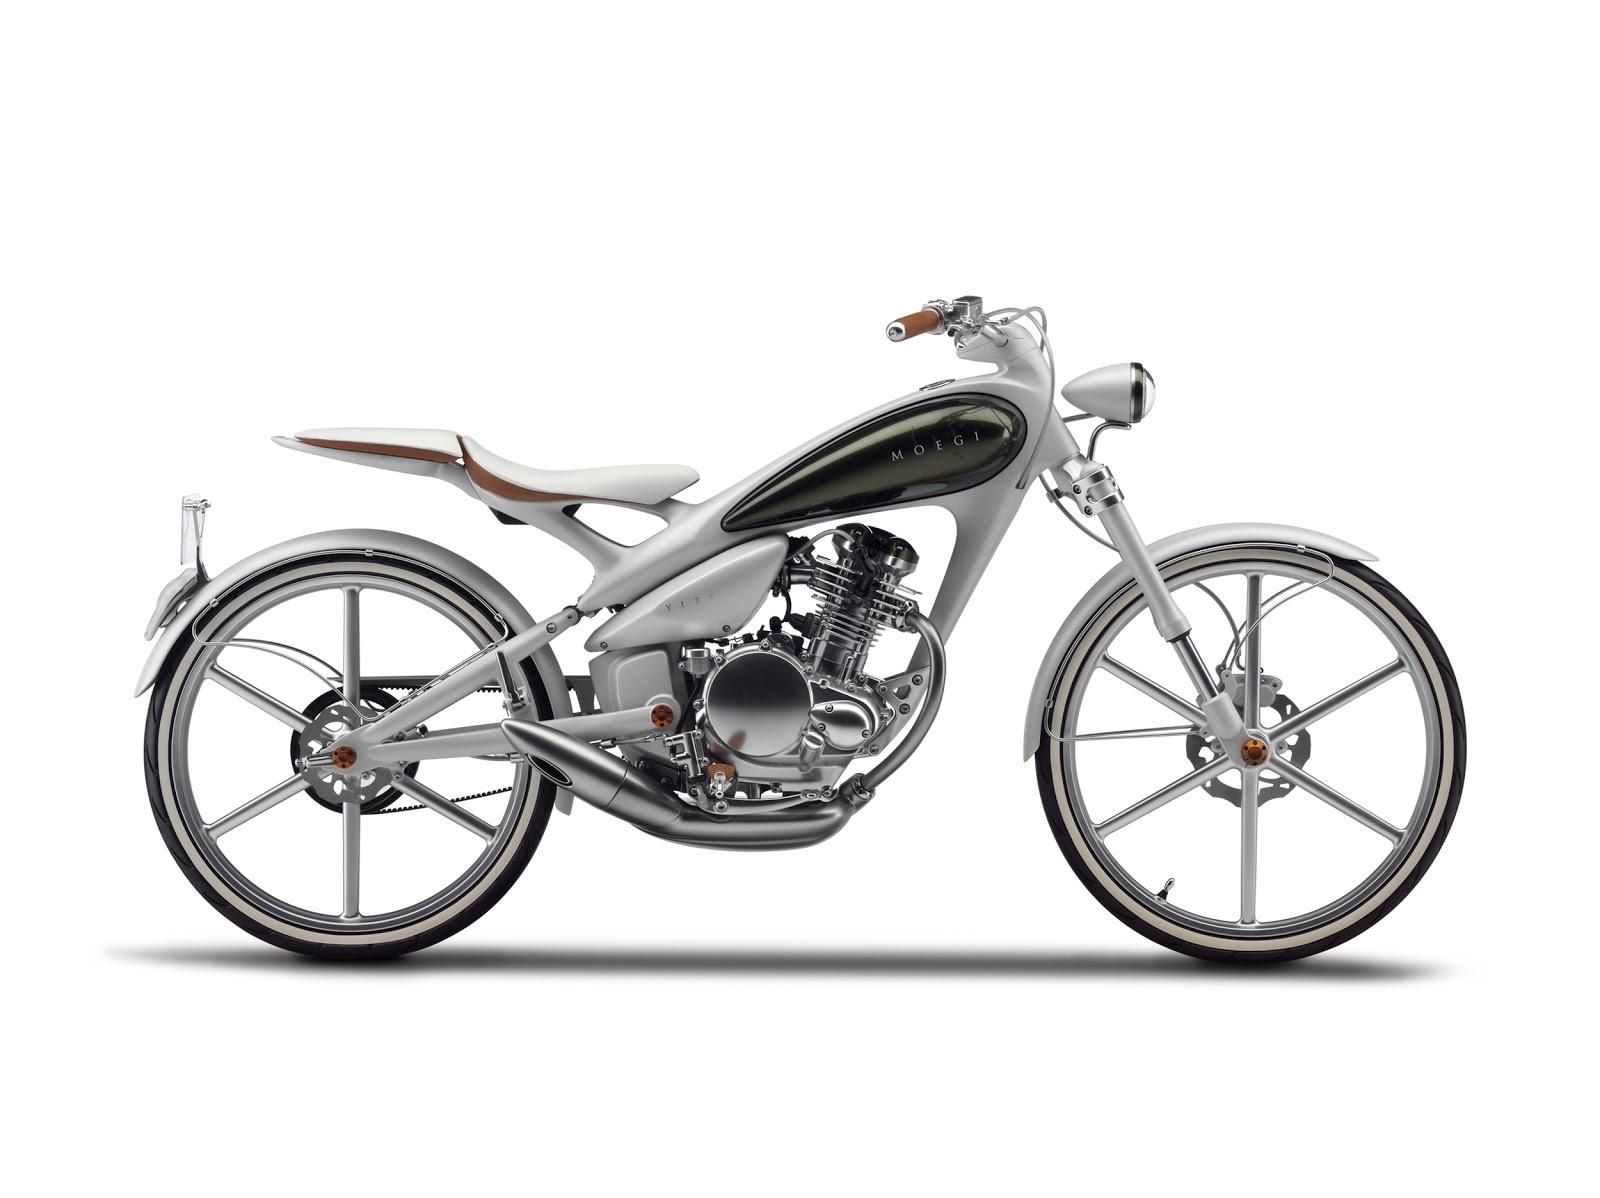 Yamaha Y125 Moegi Concept